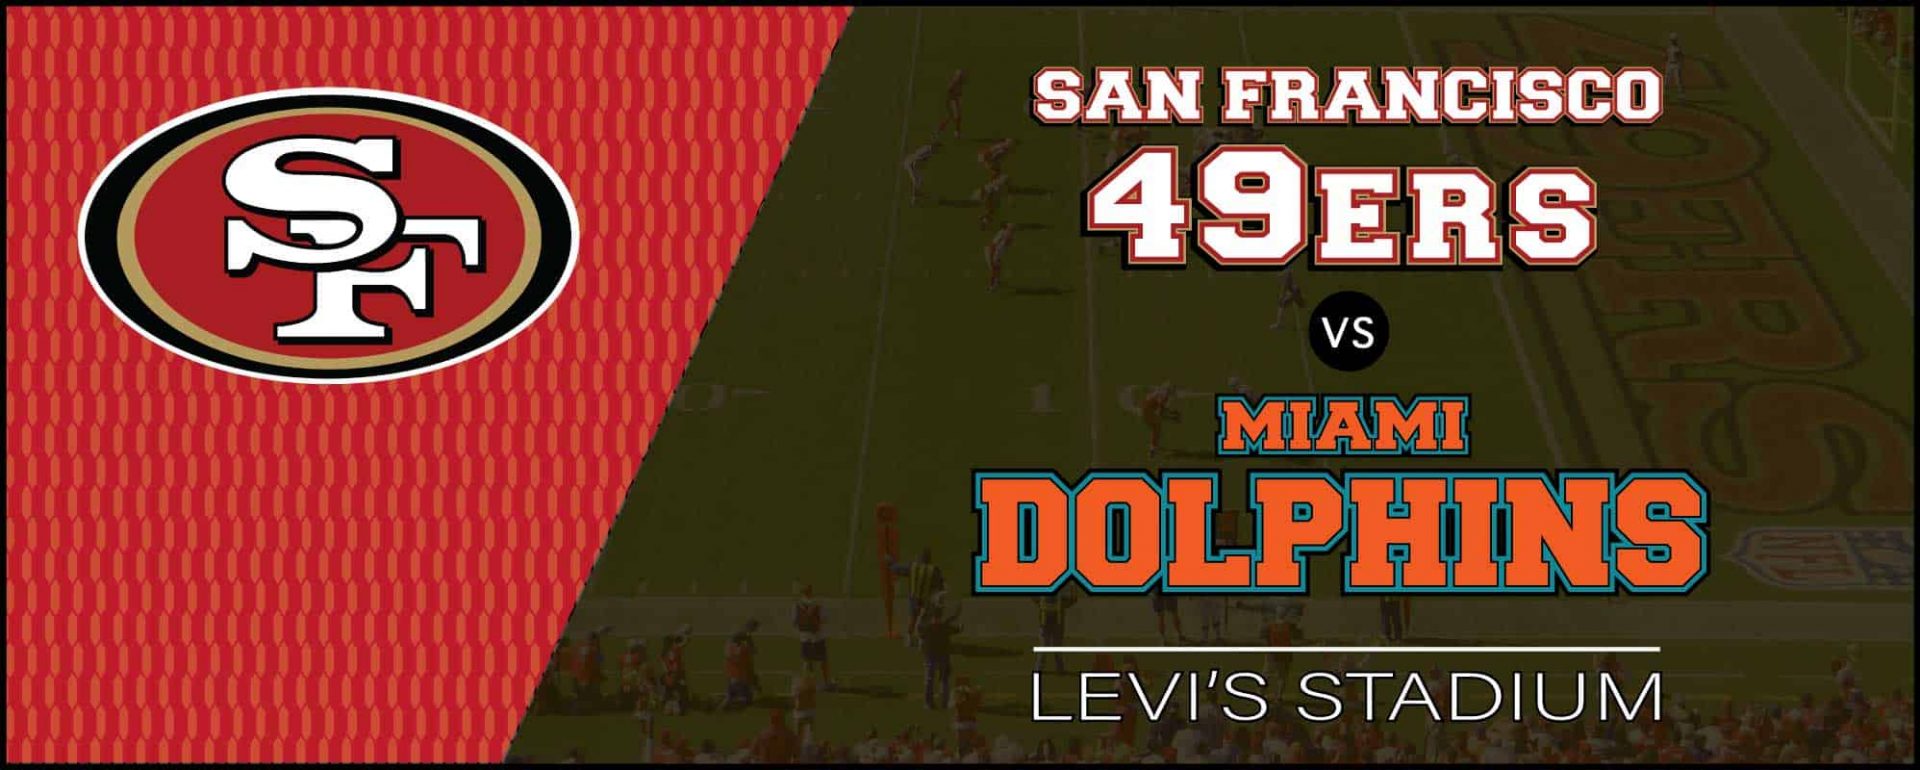 San Francisco 49ers vs. Miami Dolphins - CrawlSF